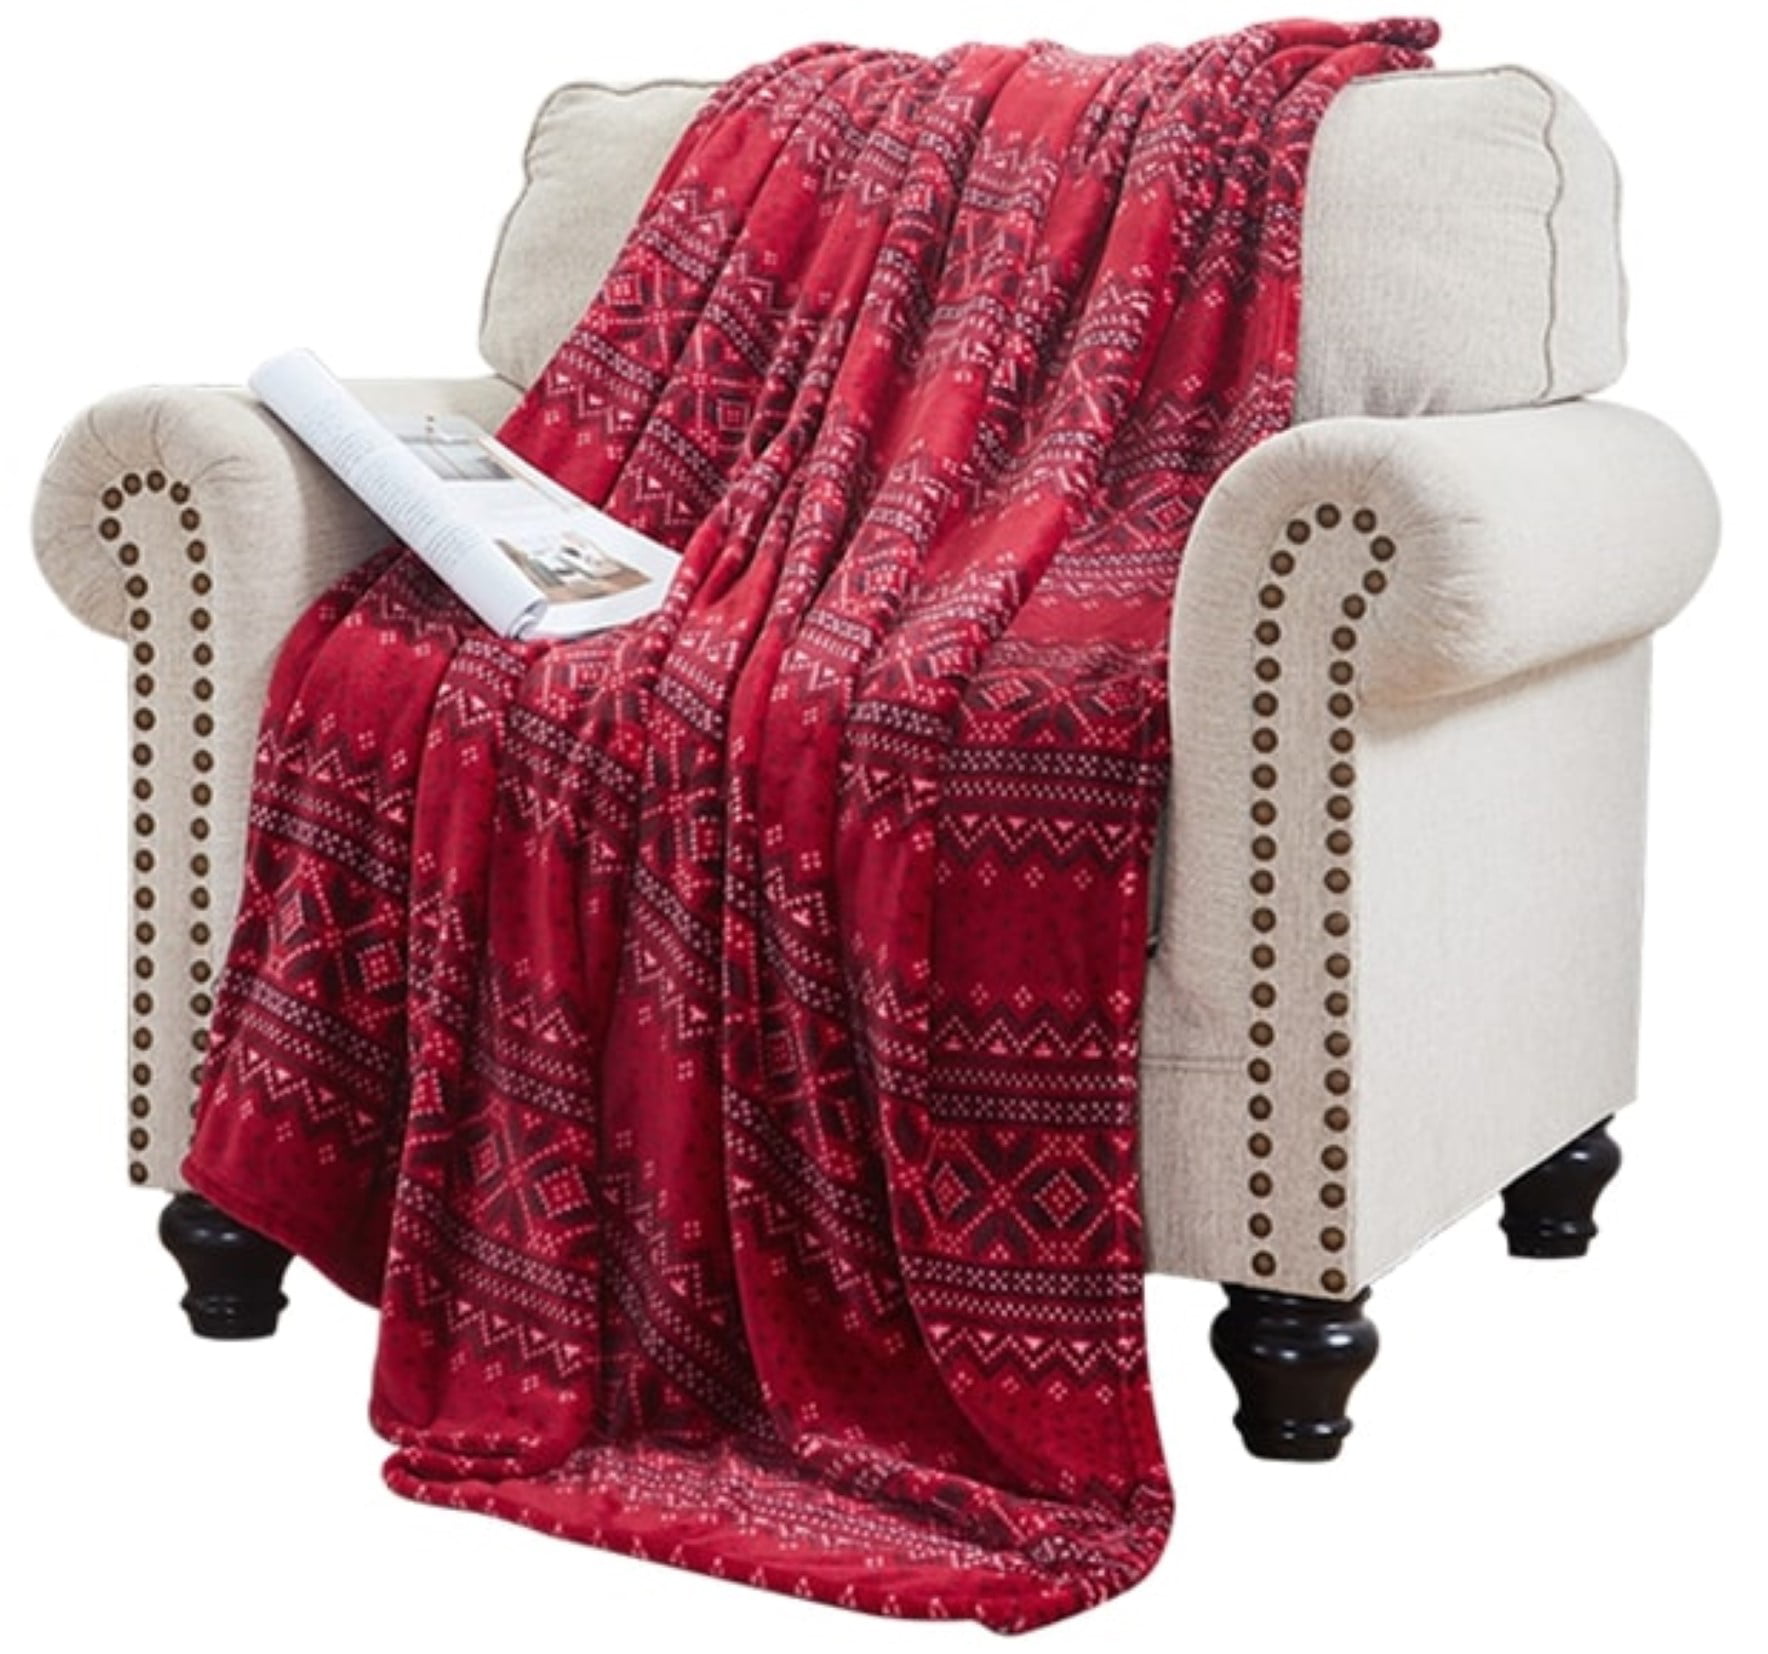 Large Bliss Luxury Super Soft Plush Teddy Fleece Throw Modern Blanket 127x152cm 